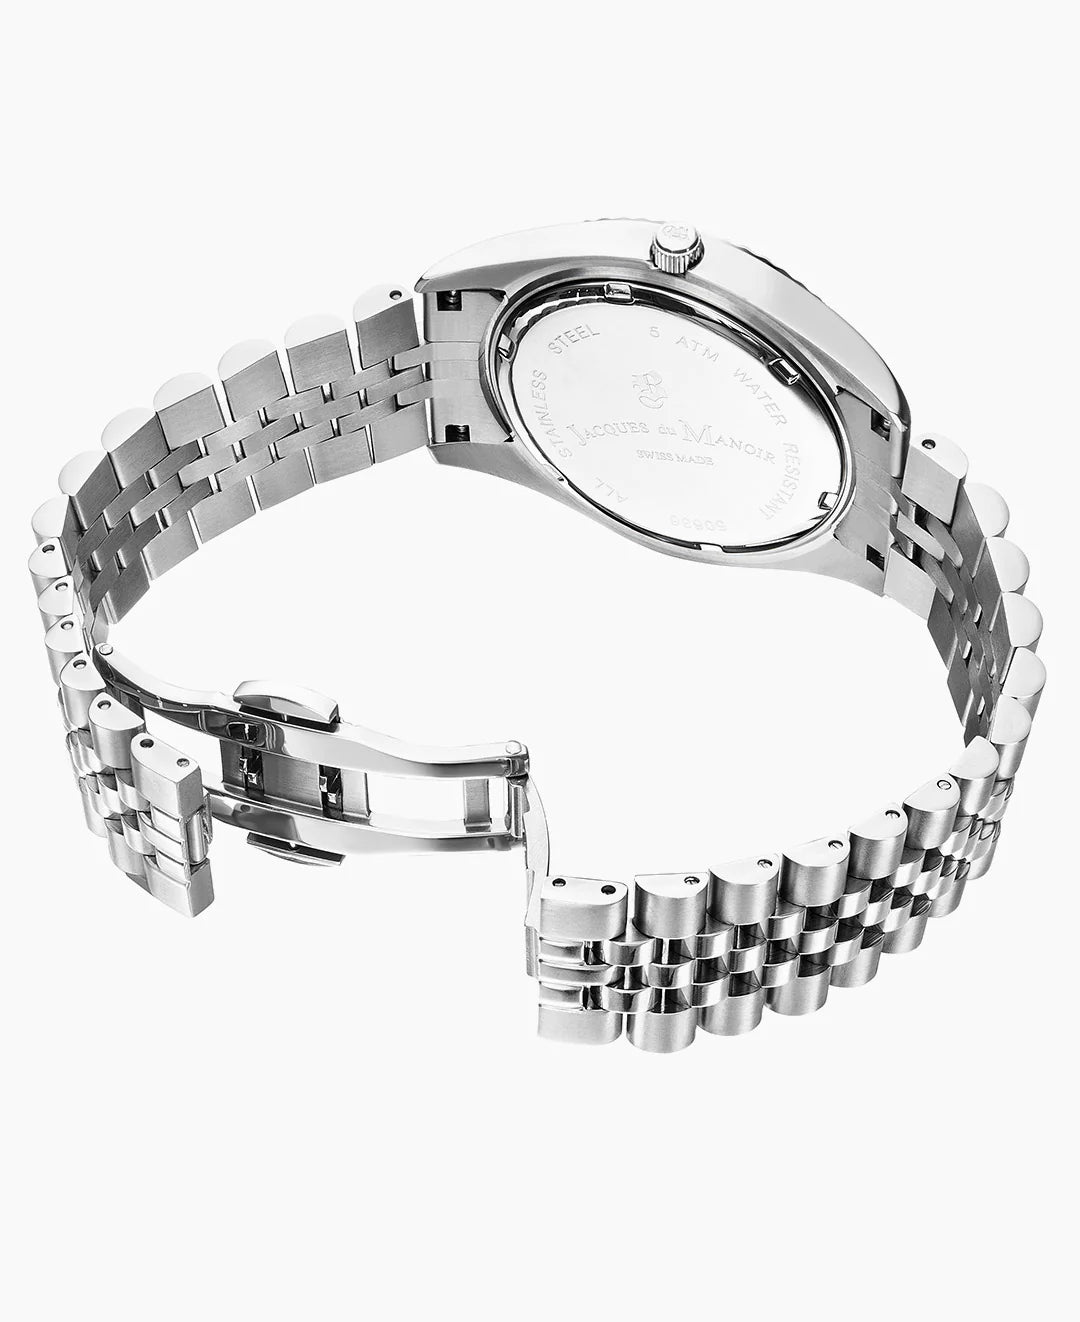 Jacques du Manoir Inspiration DayDate Silver Watch